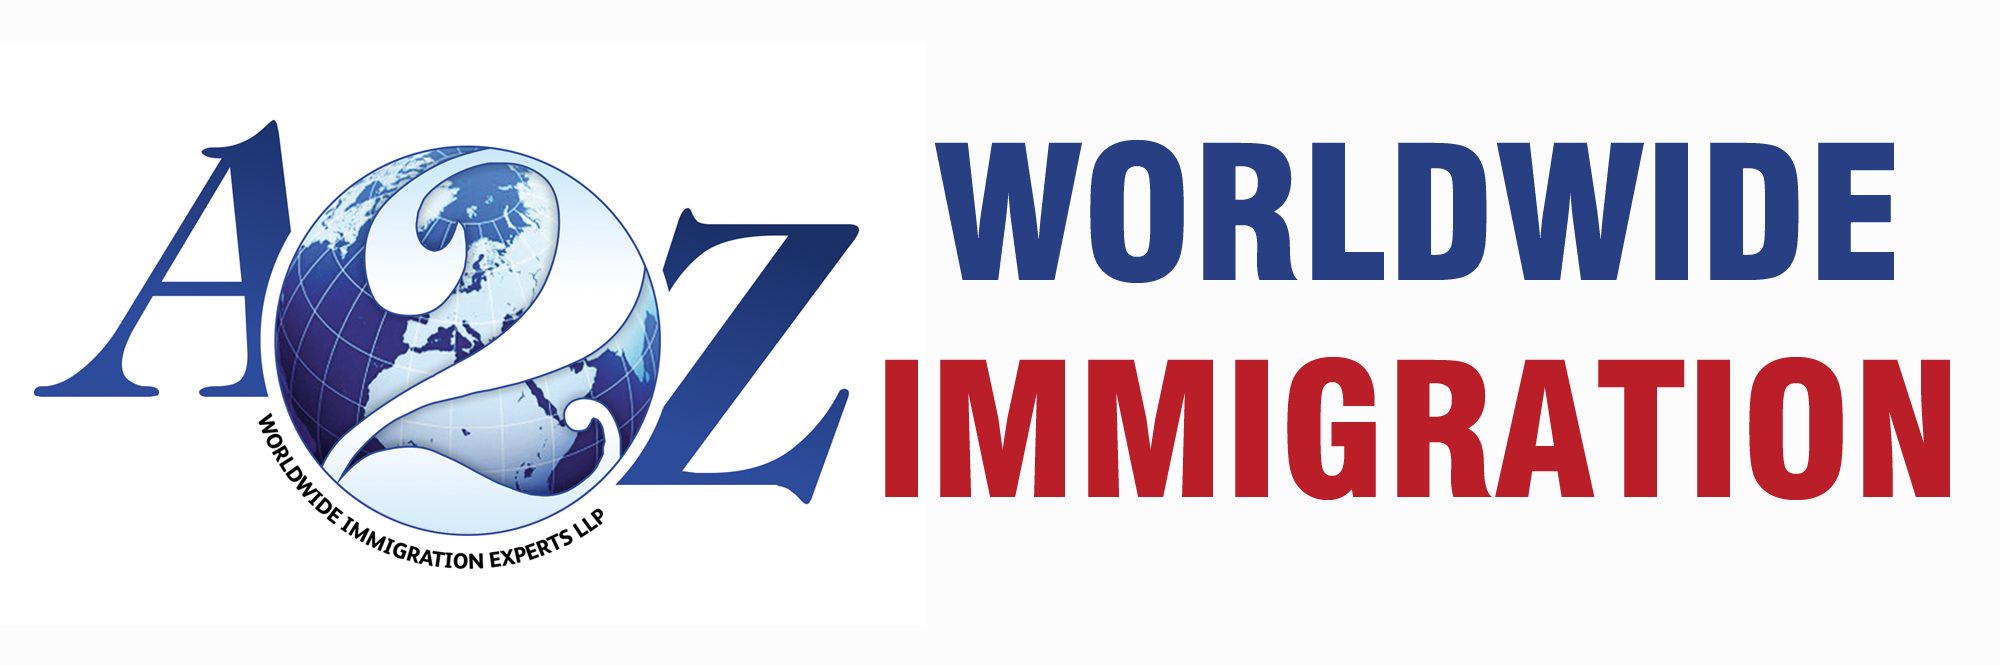 A2Z Worldwide Immigration